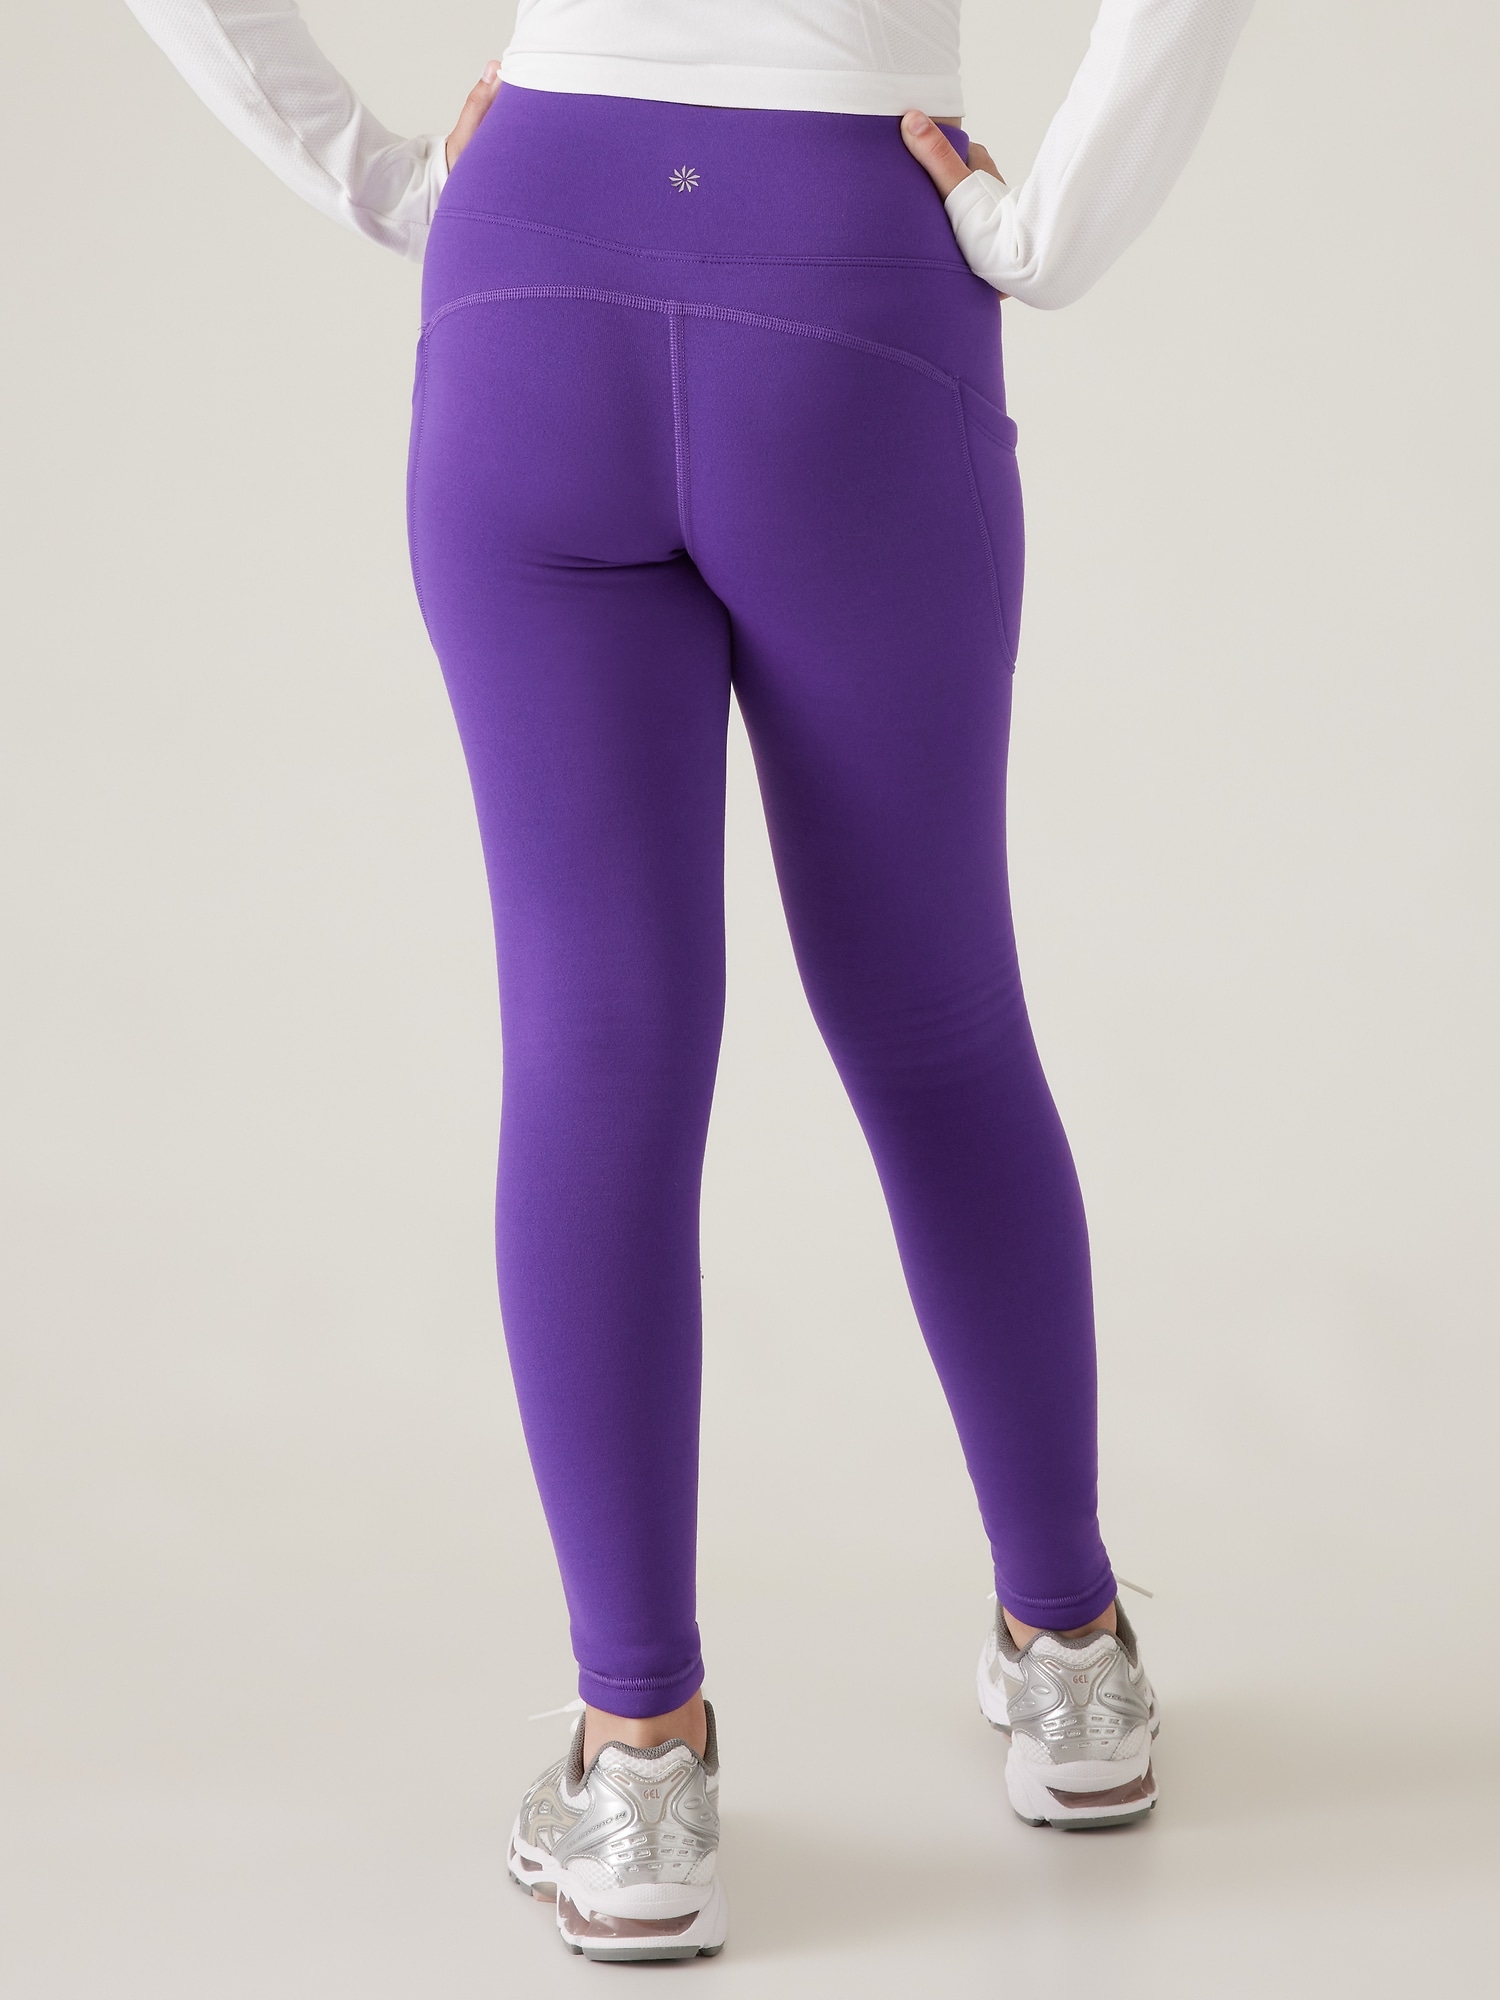 Athleta Girl Size XXL/16 Camo Leggings Purple Full Length